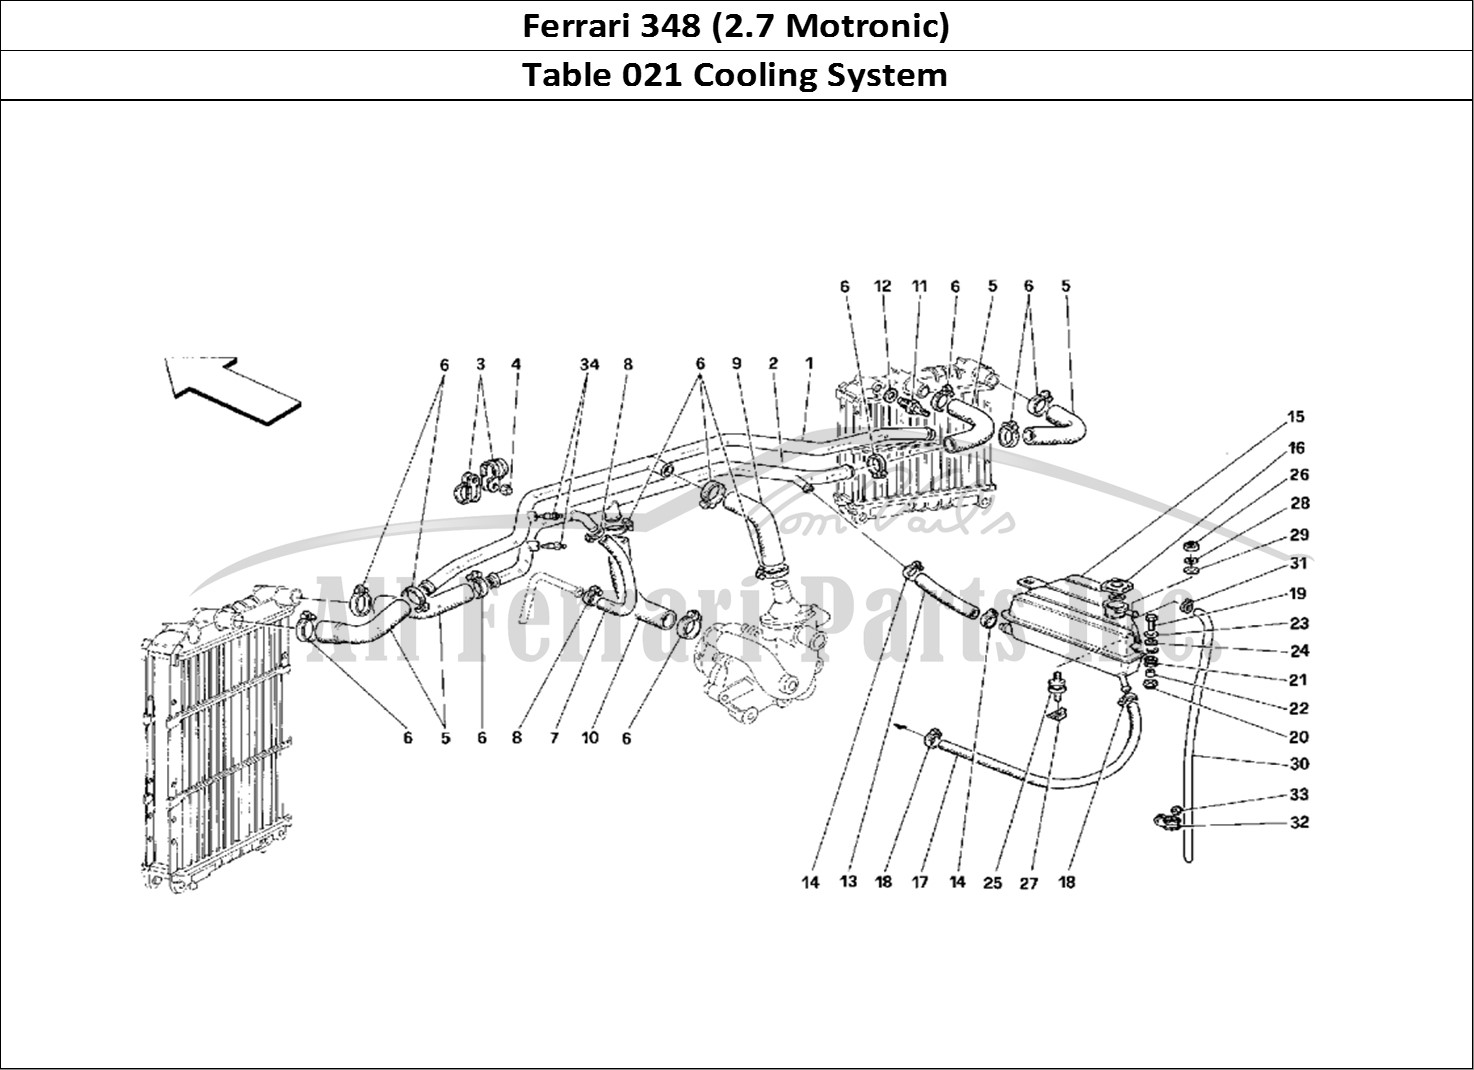 Ferrari Parts Ferrari 348 (2.7 Motronic) Page 021 Cooling System